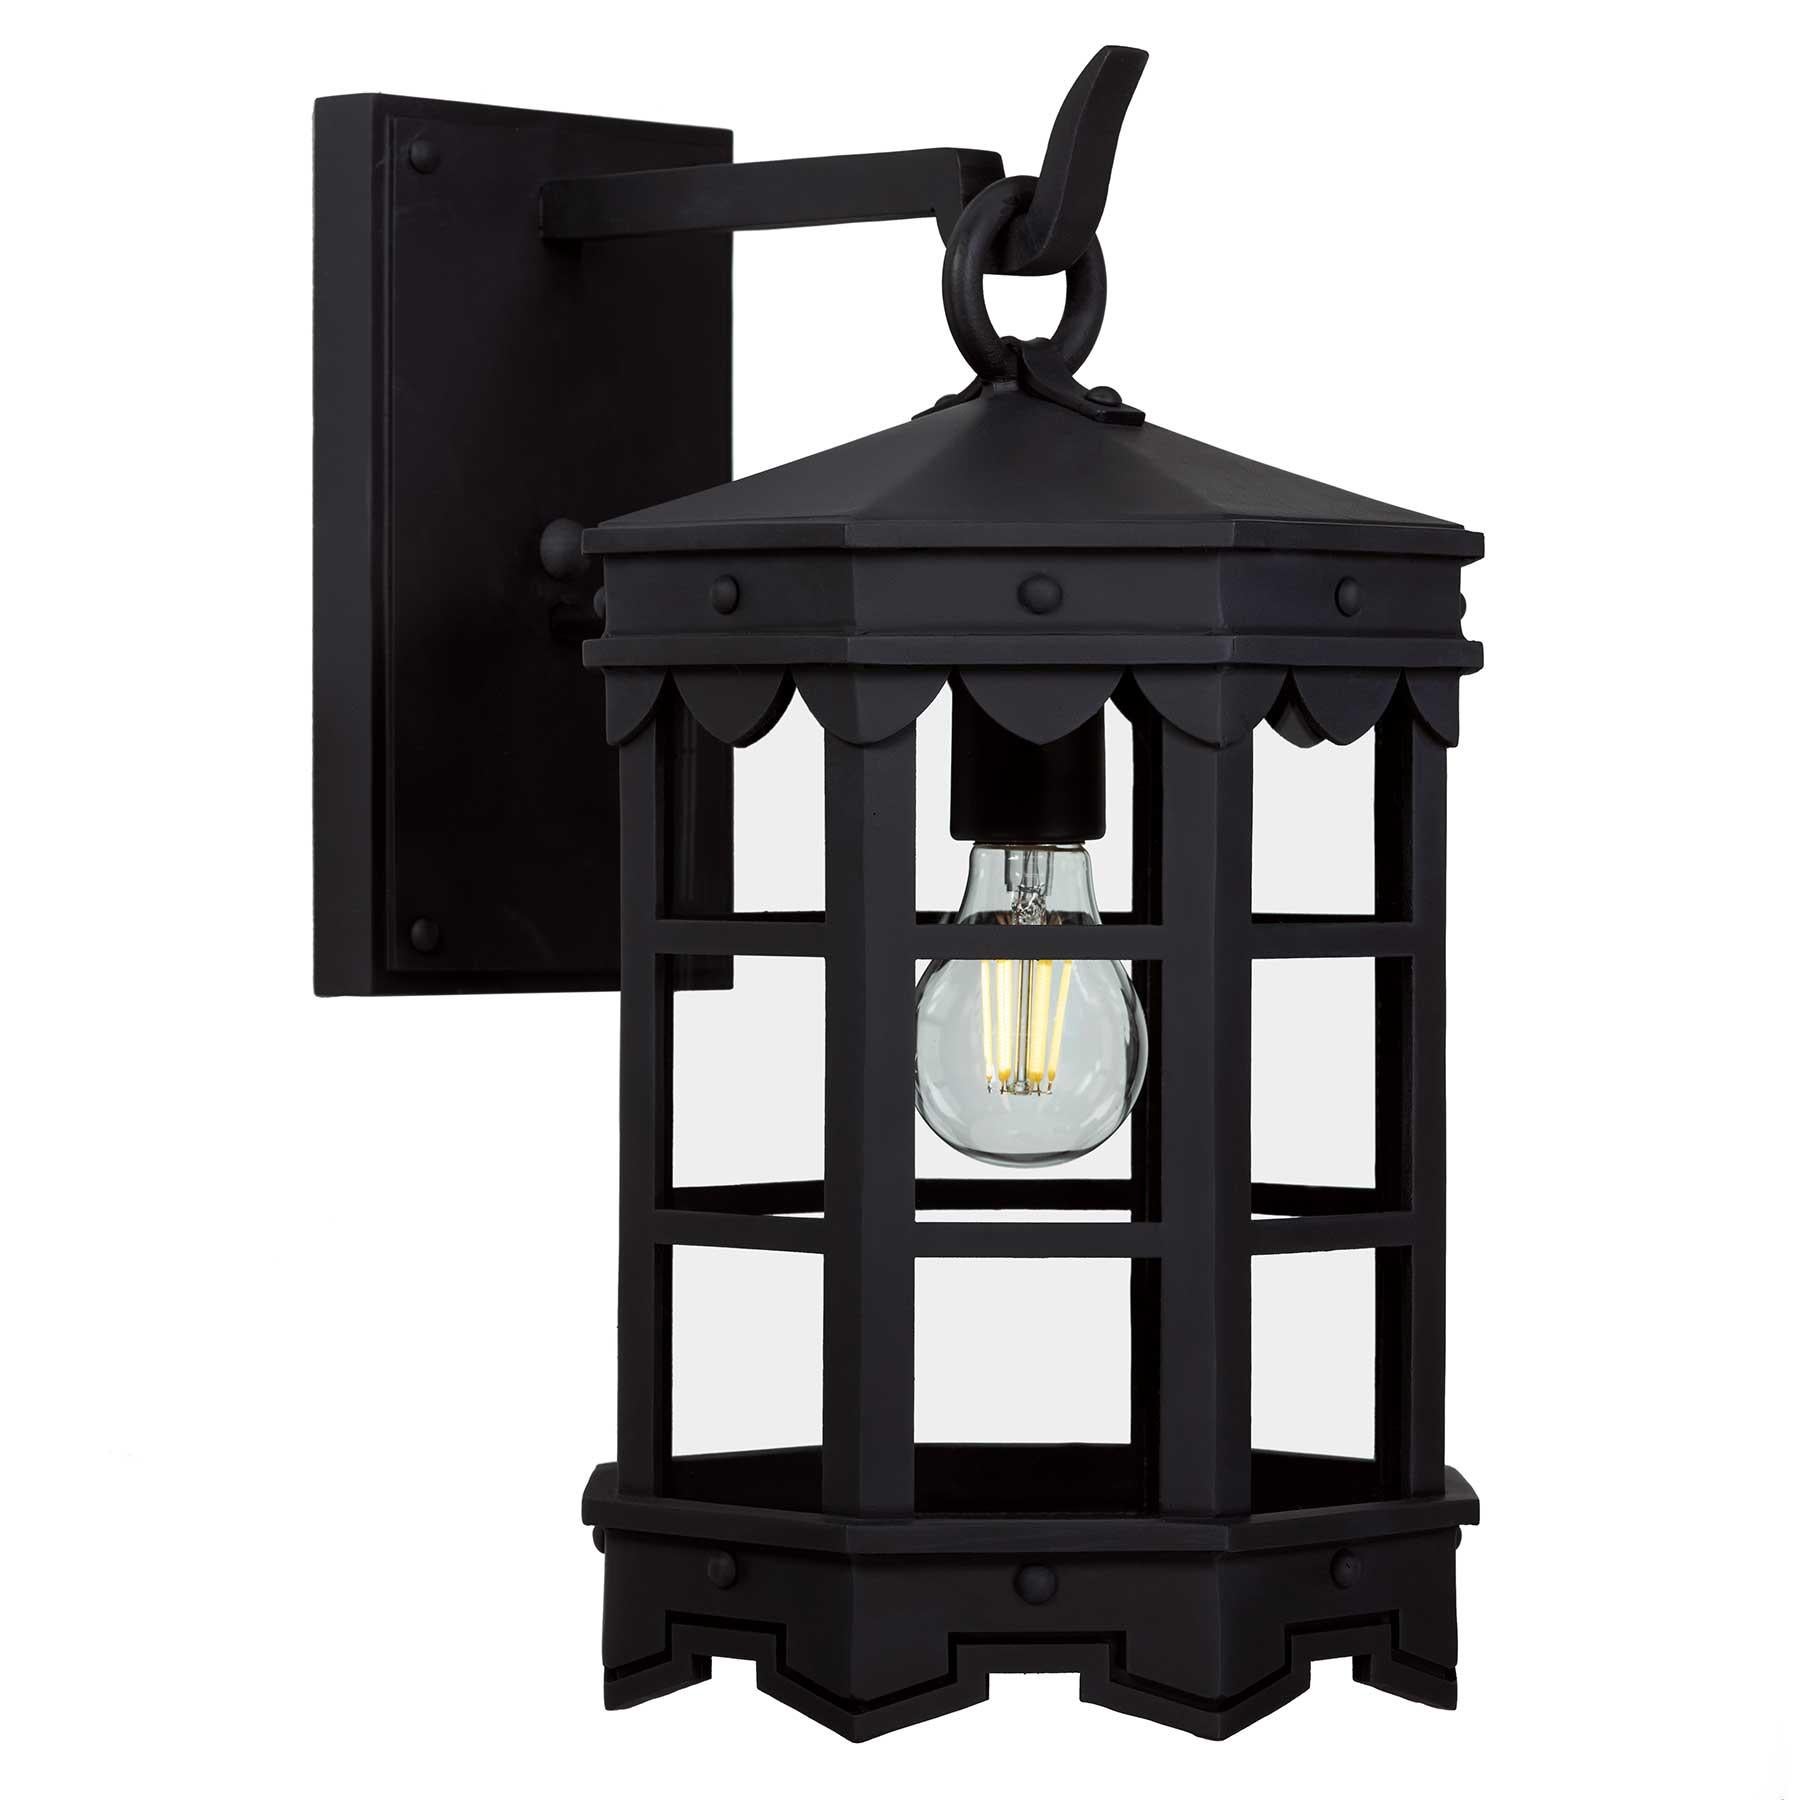 Spanish Colonial Mediterranean, Spanish Style Handmade Exterior Lantern Wall Mount Light Fixture For Sale